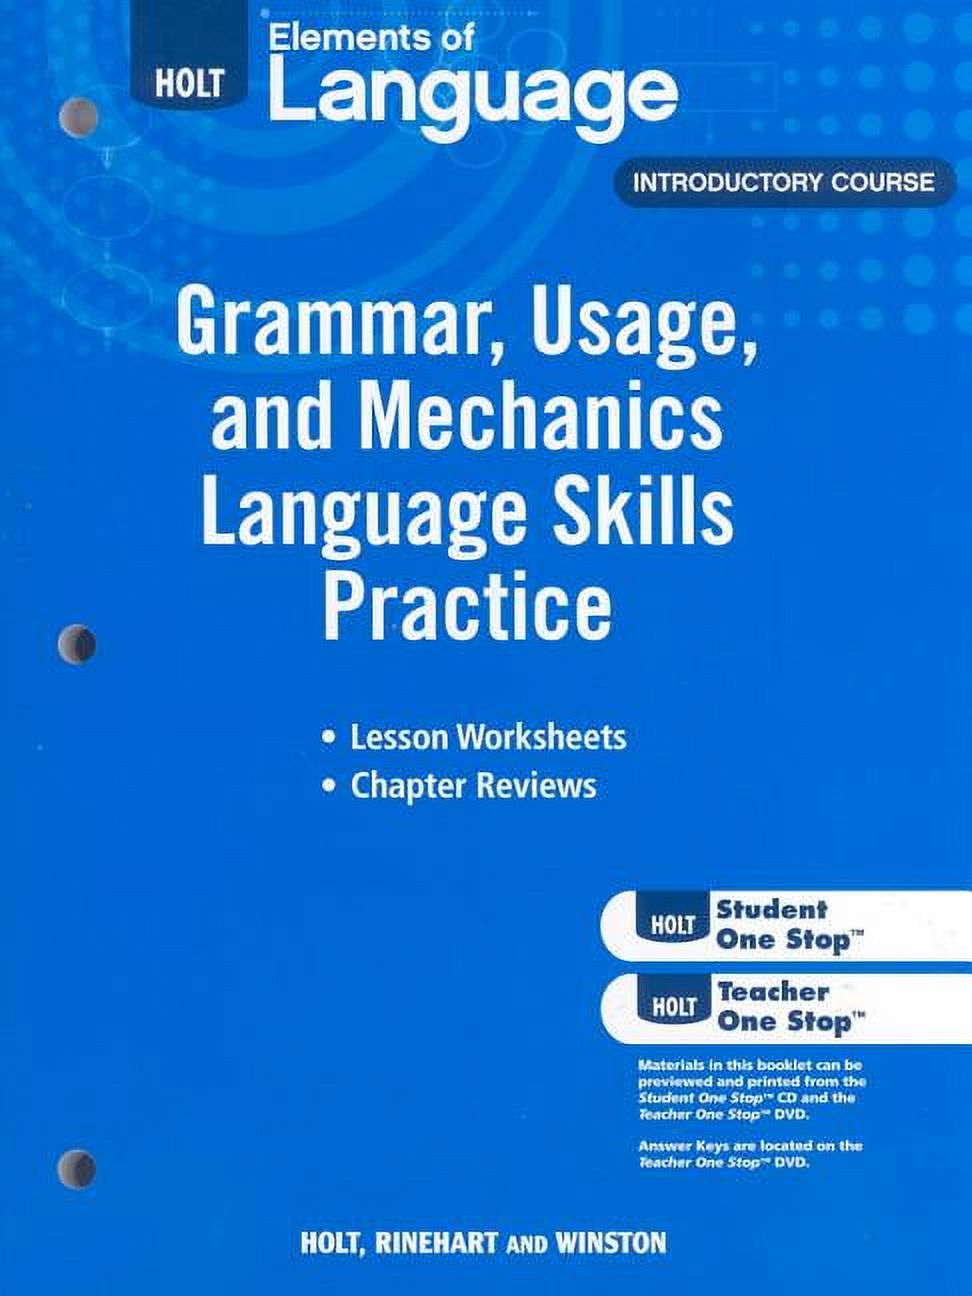 Introductory　Mechanics　Language,　and　of　Holt　Usage,　Grammar,　Course:　Elements　Practice　Language　Skills